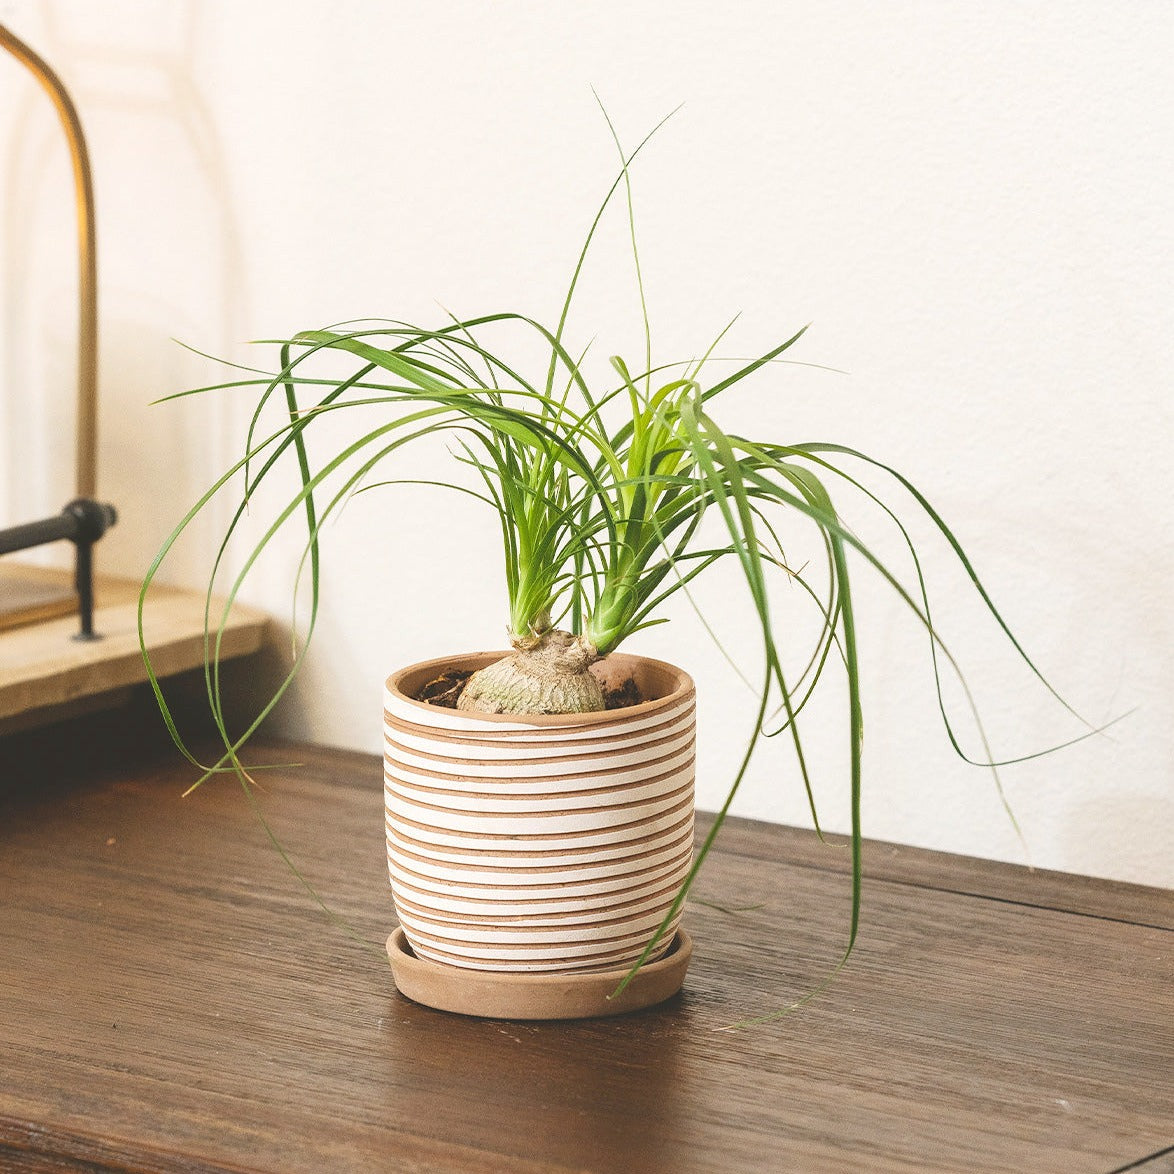 Ponytail Palm plant in decorative planter, Indoor plant decor ideas